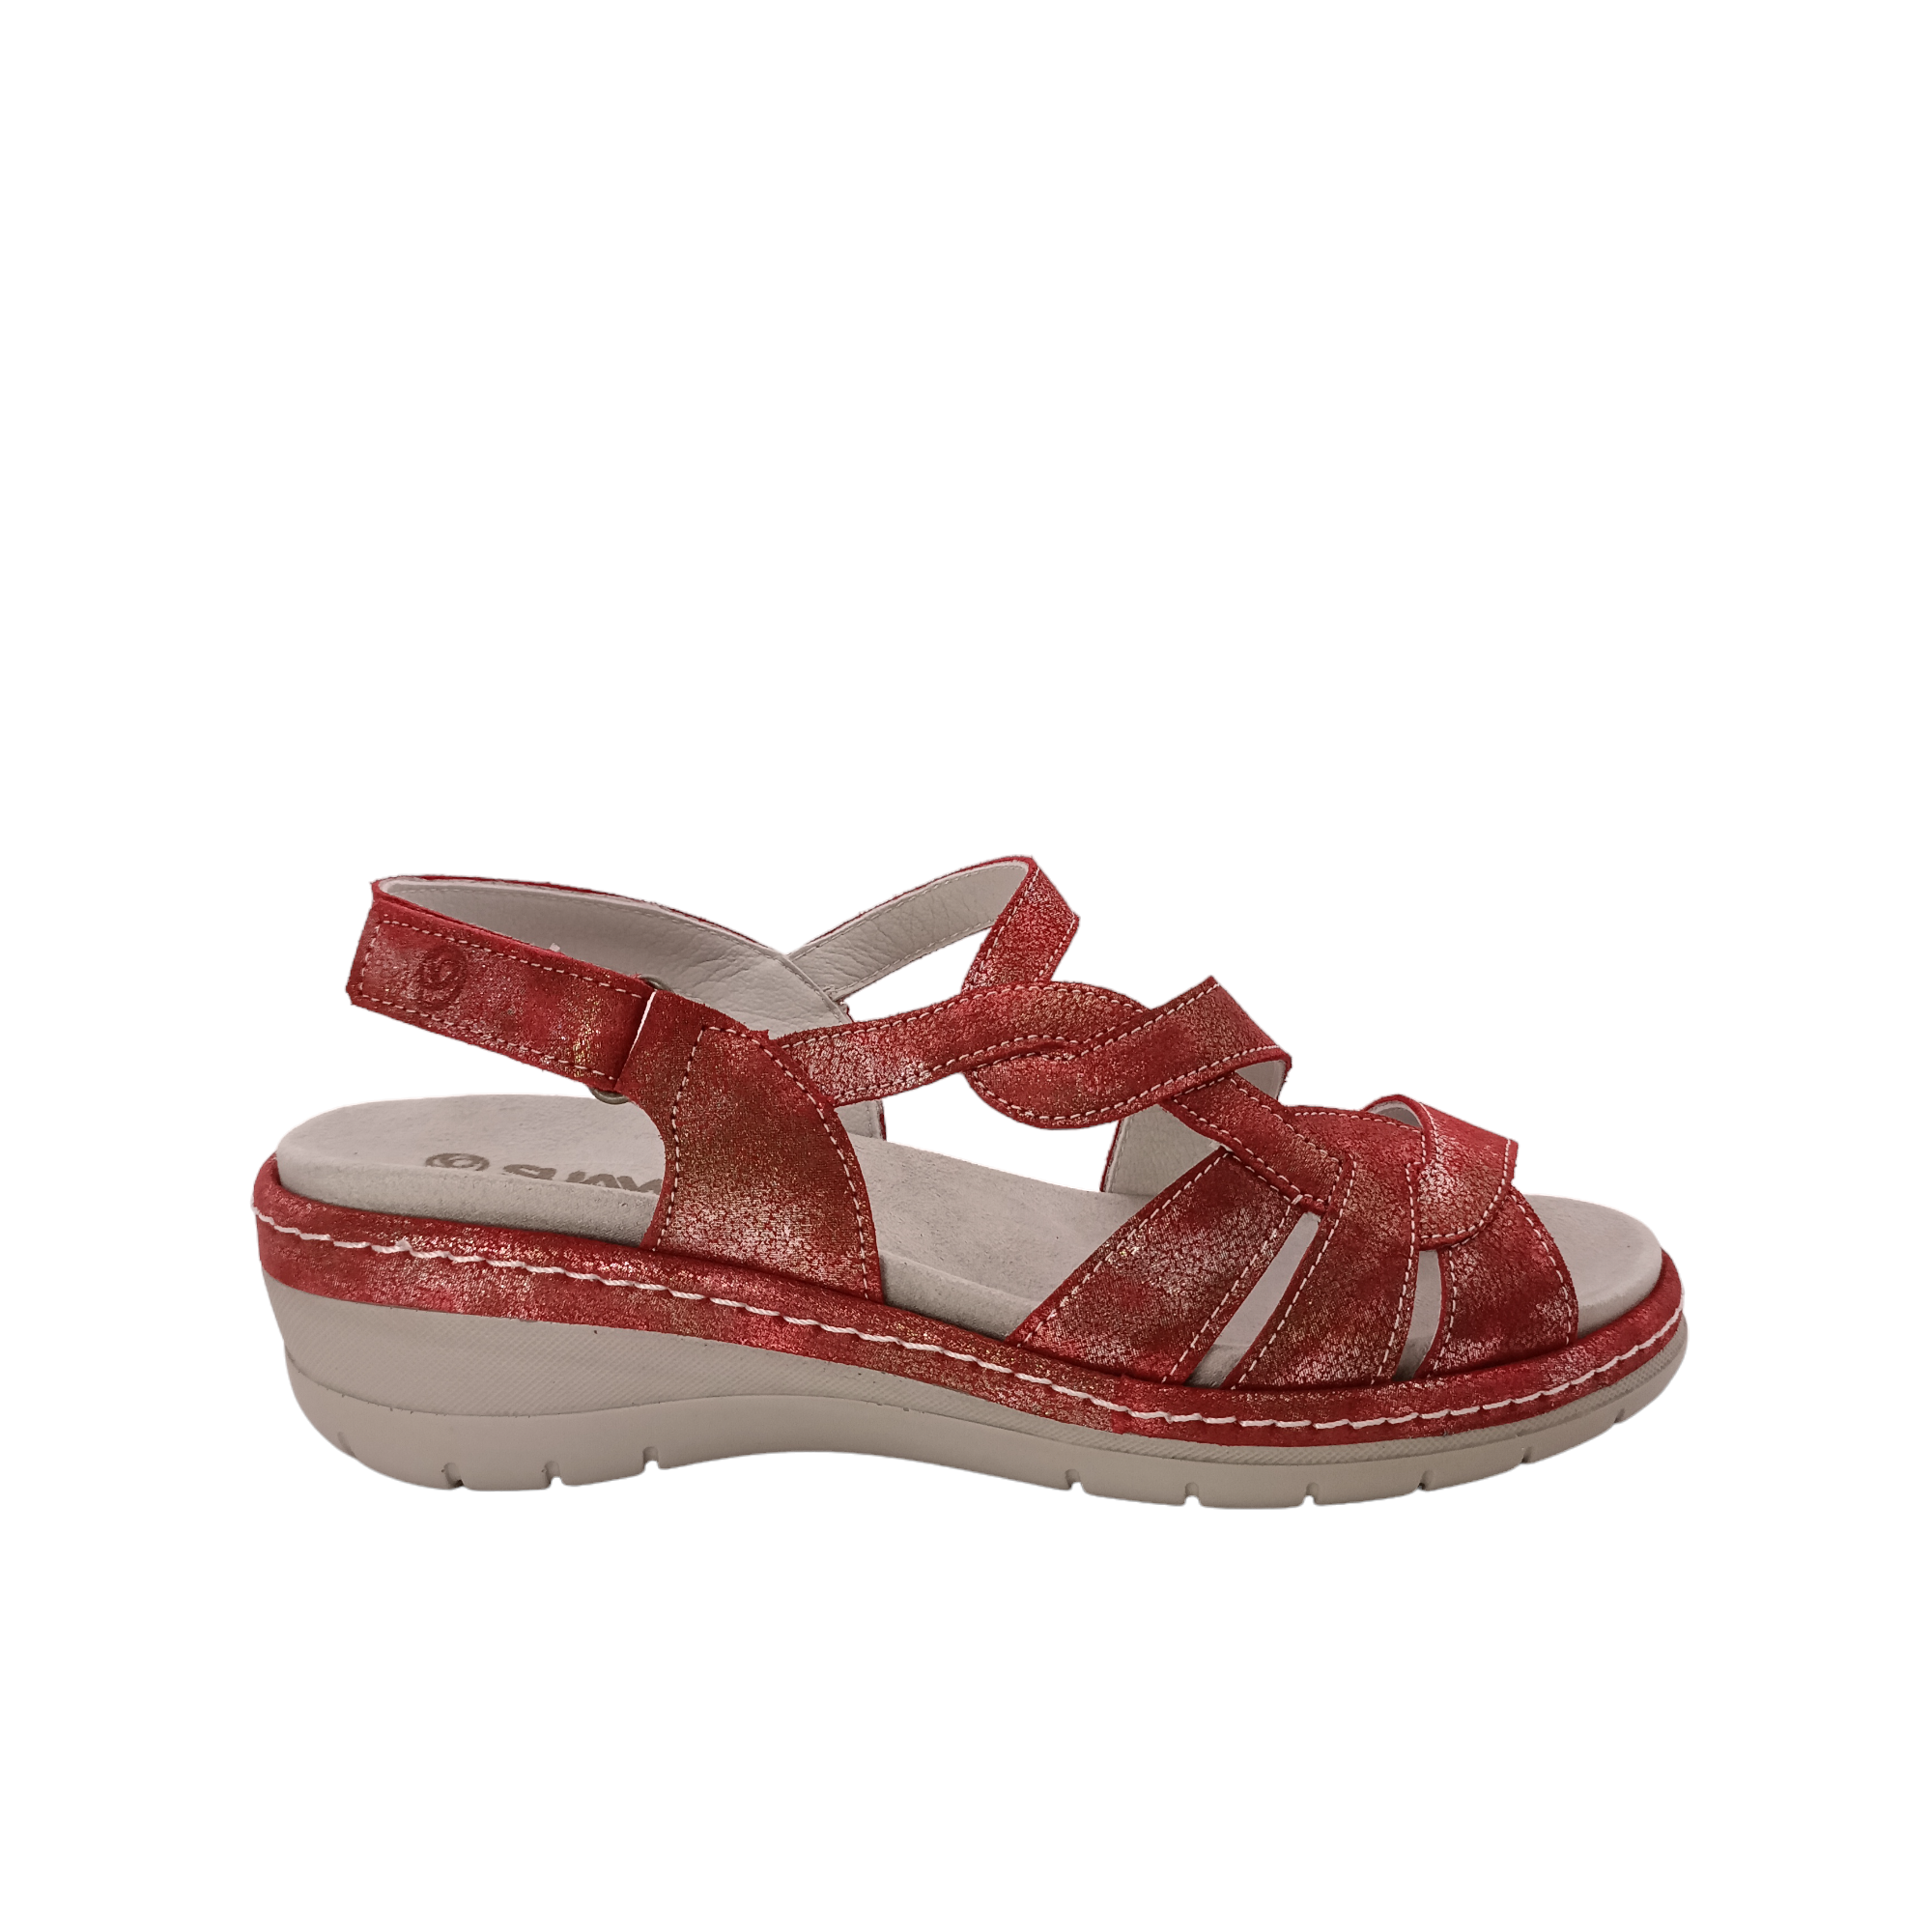 Elisa - shoe&amp;me - Suave - Sandal - Sandals, Summer, Womens